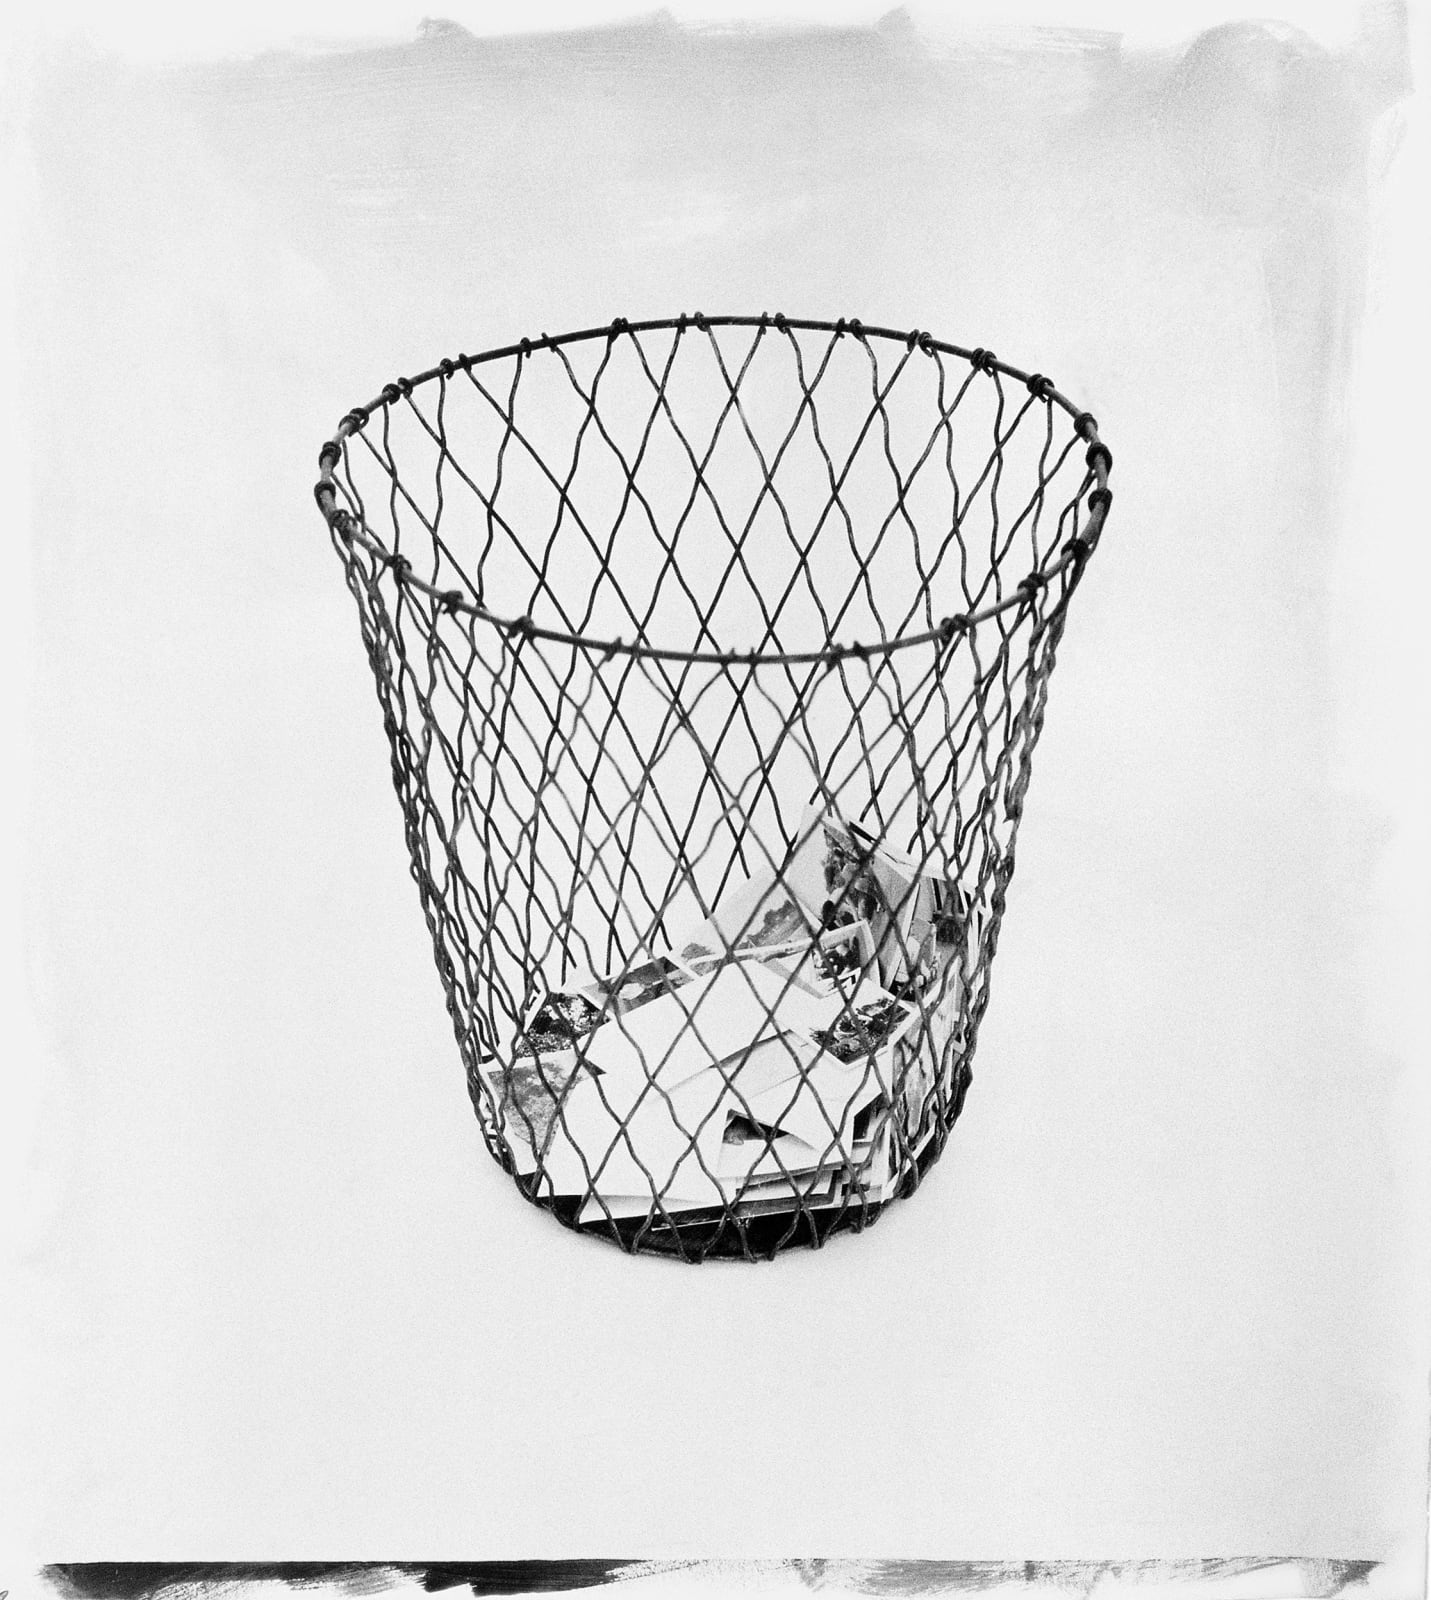 Stephen Inggs, Wire Basket 2, 2003